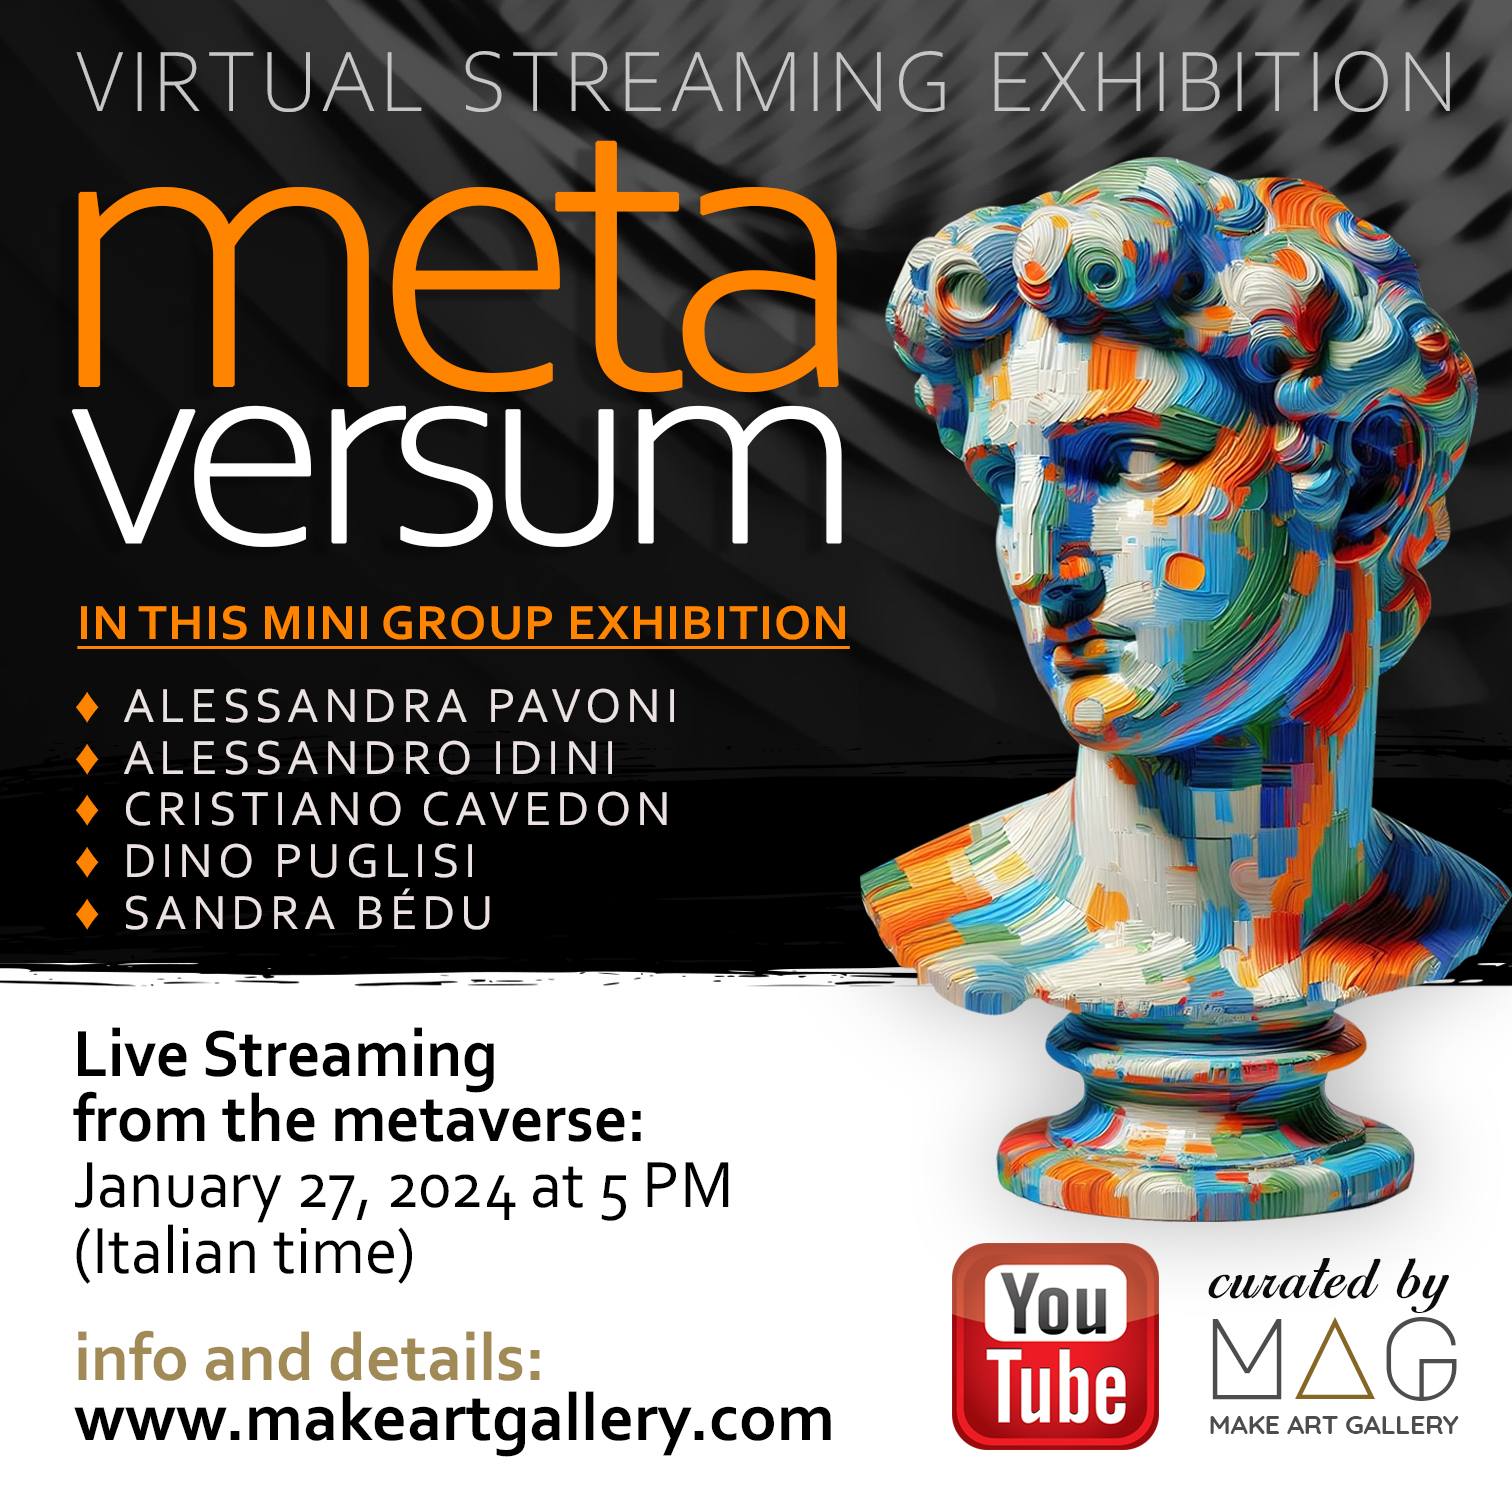 Mostra virtuale | in streaming dal Metaverso - Titolo: Metaversum mini group exhibition